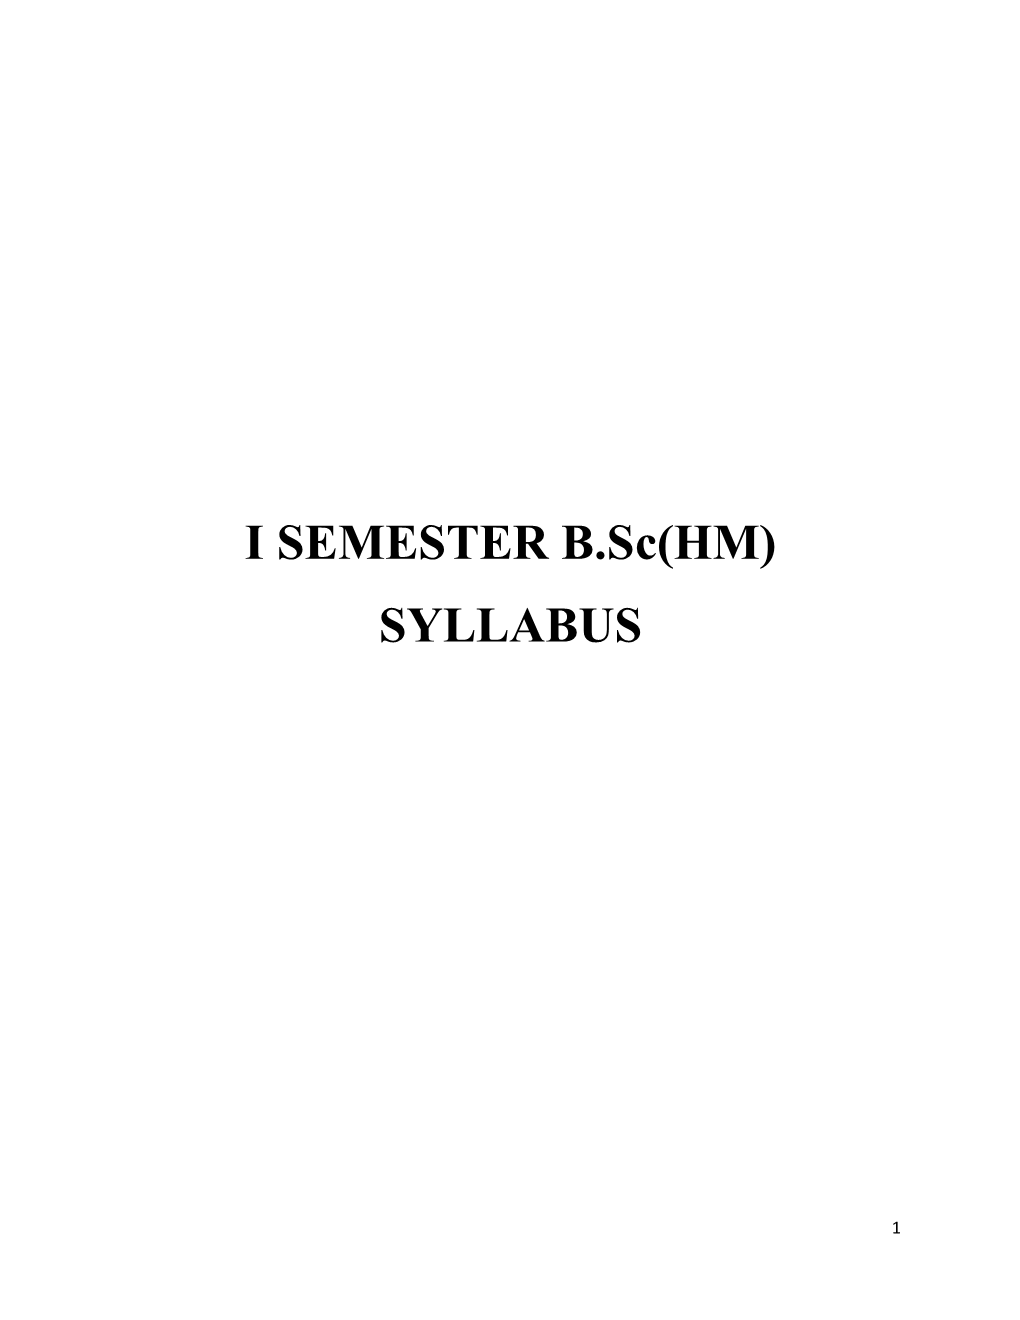 I SEMESTER B.Sc(HM) SYLLABUS